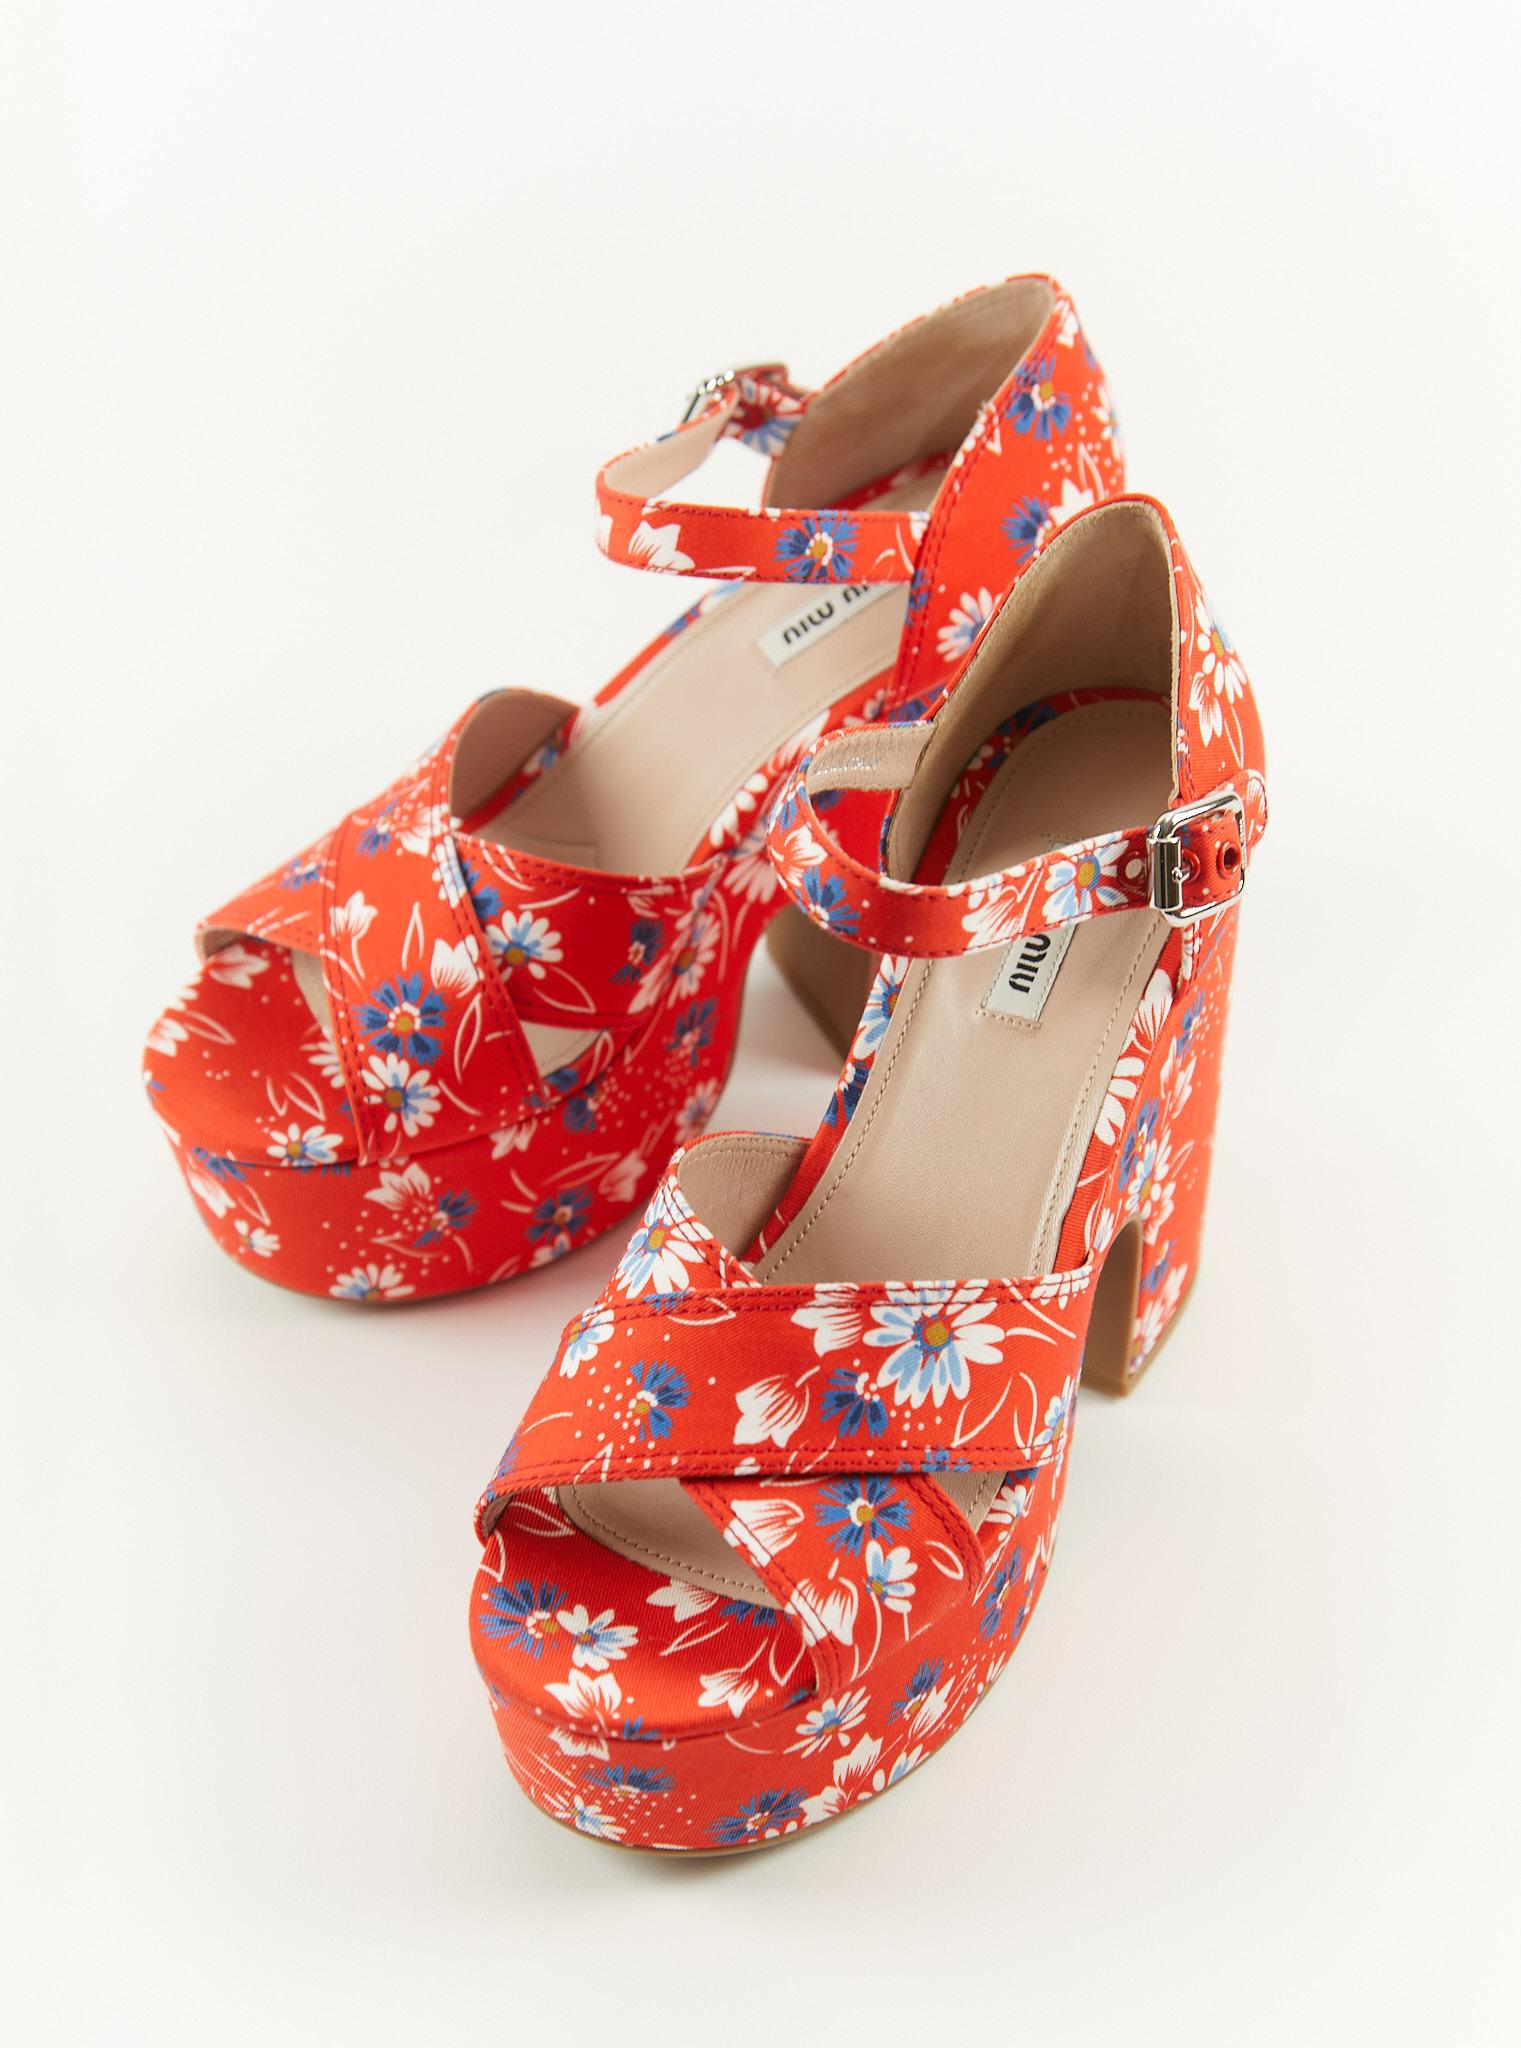 MIU MIU Daisy Print Twill Platform Sandals - Size 40.5 (EU) In New Condition For Sale In London, GB